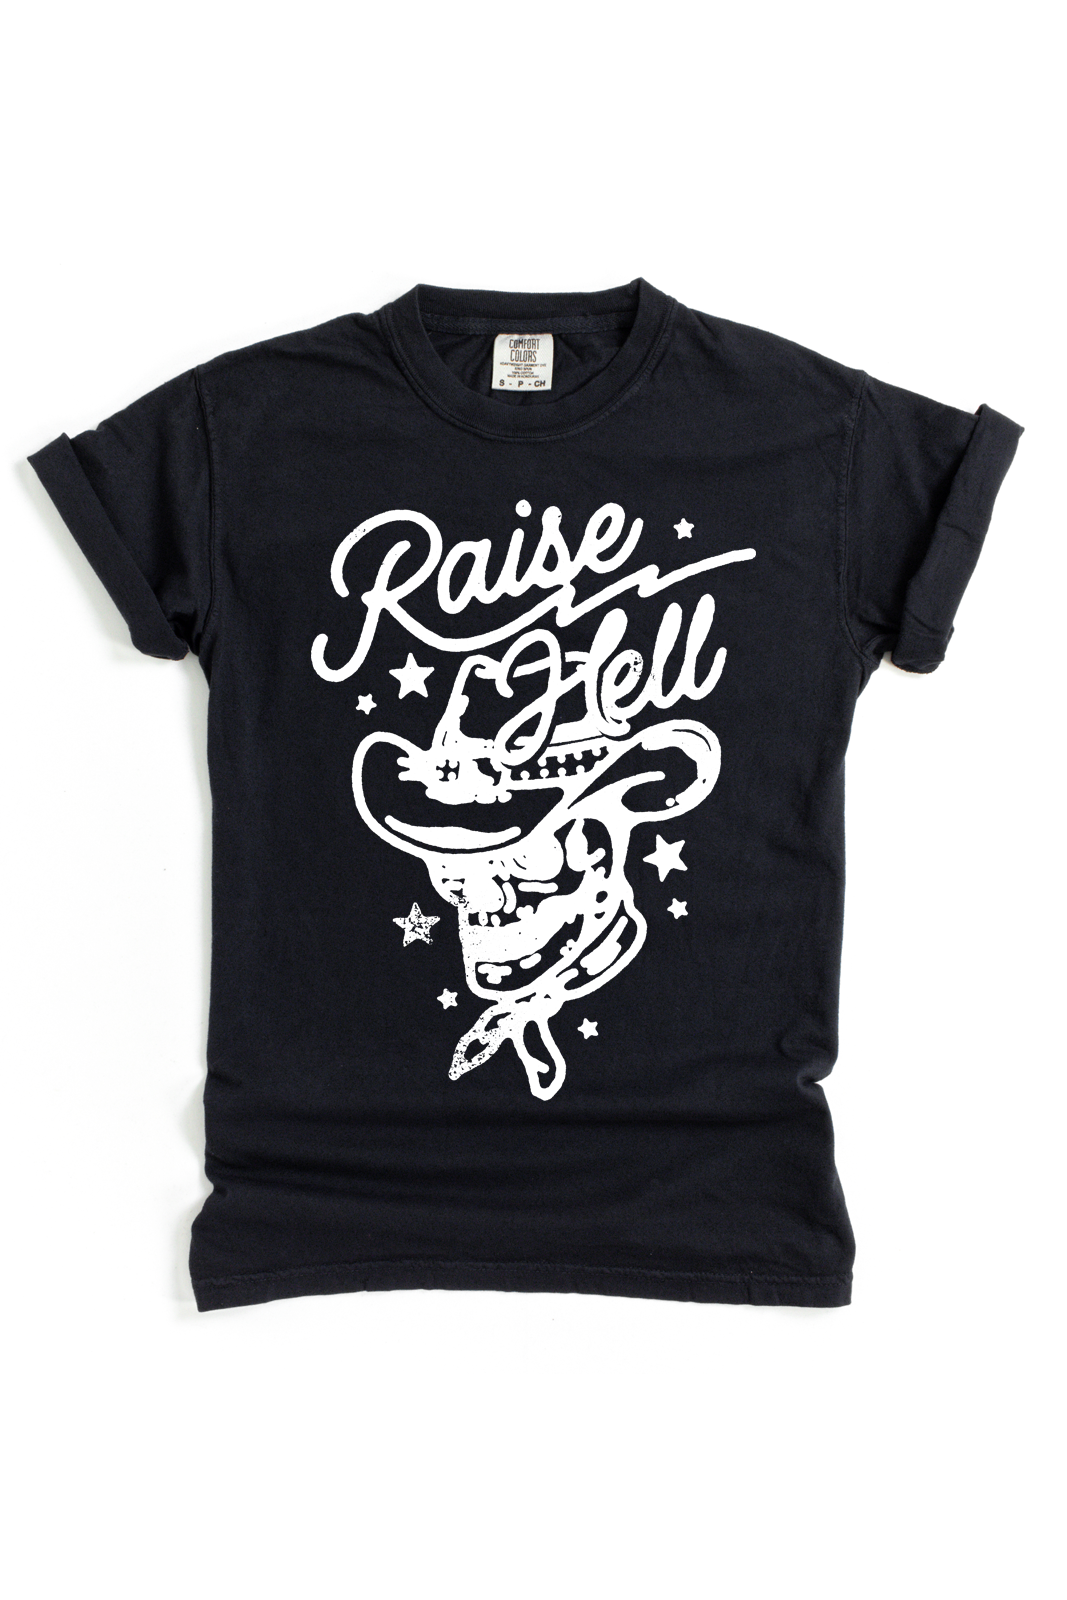 Raise Hell Tee/Sweatshirt